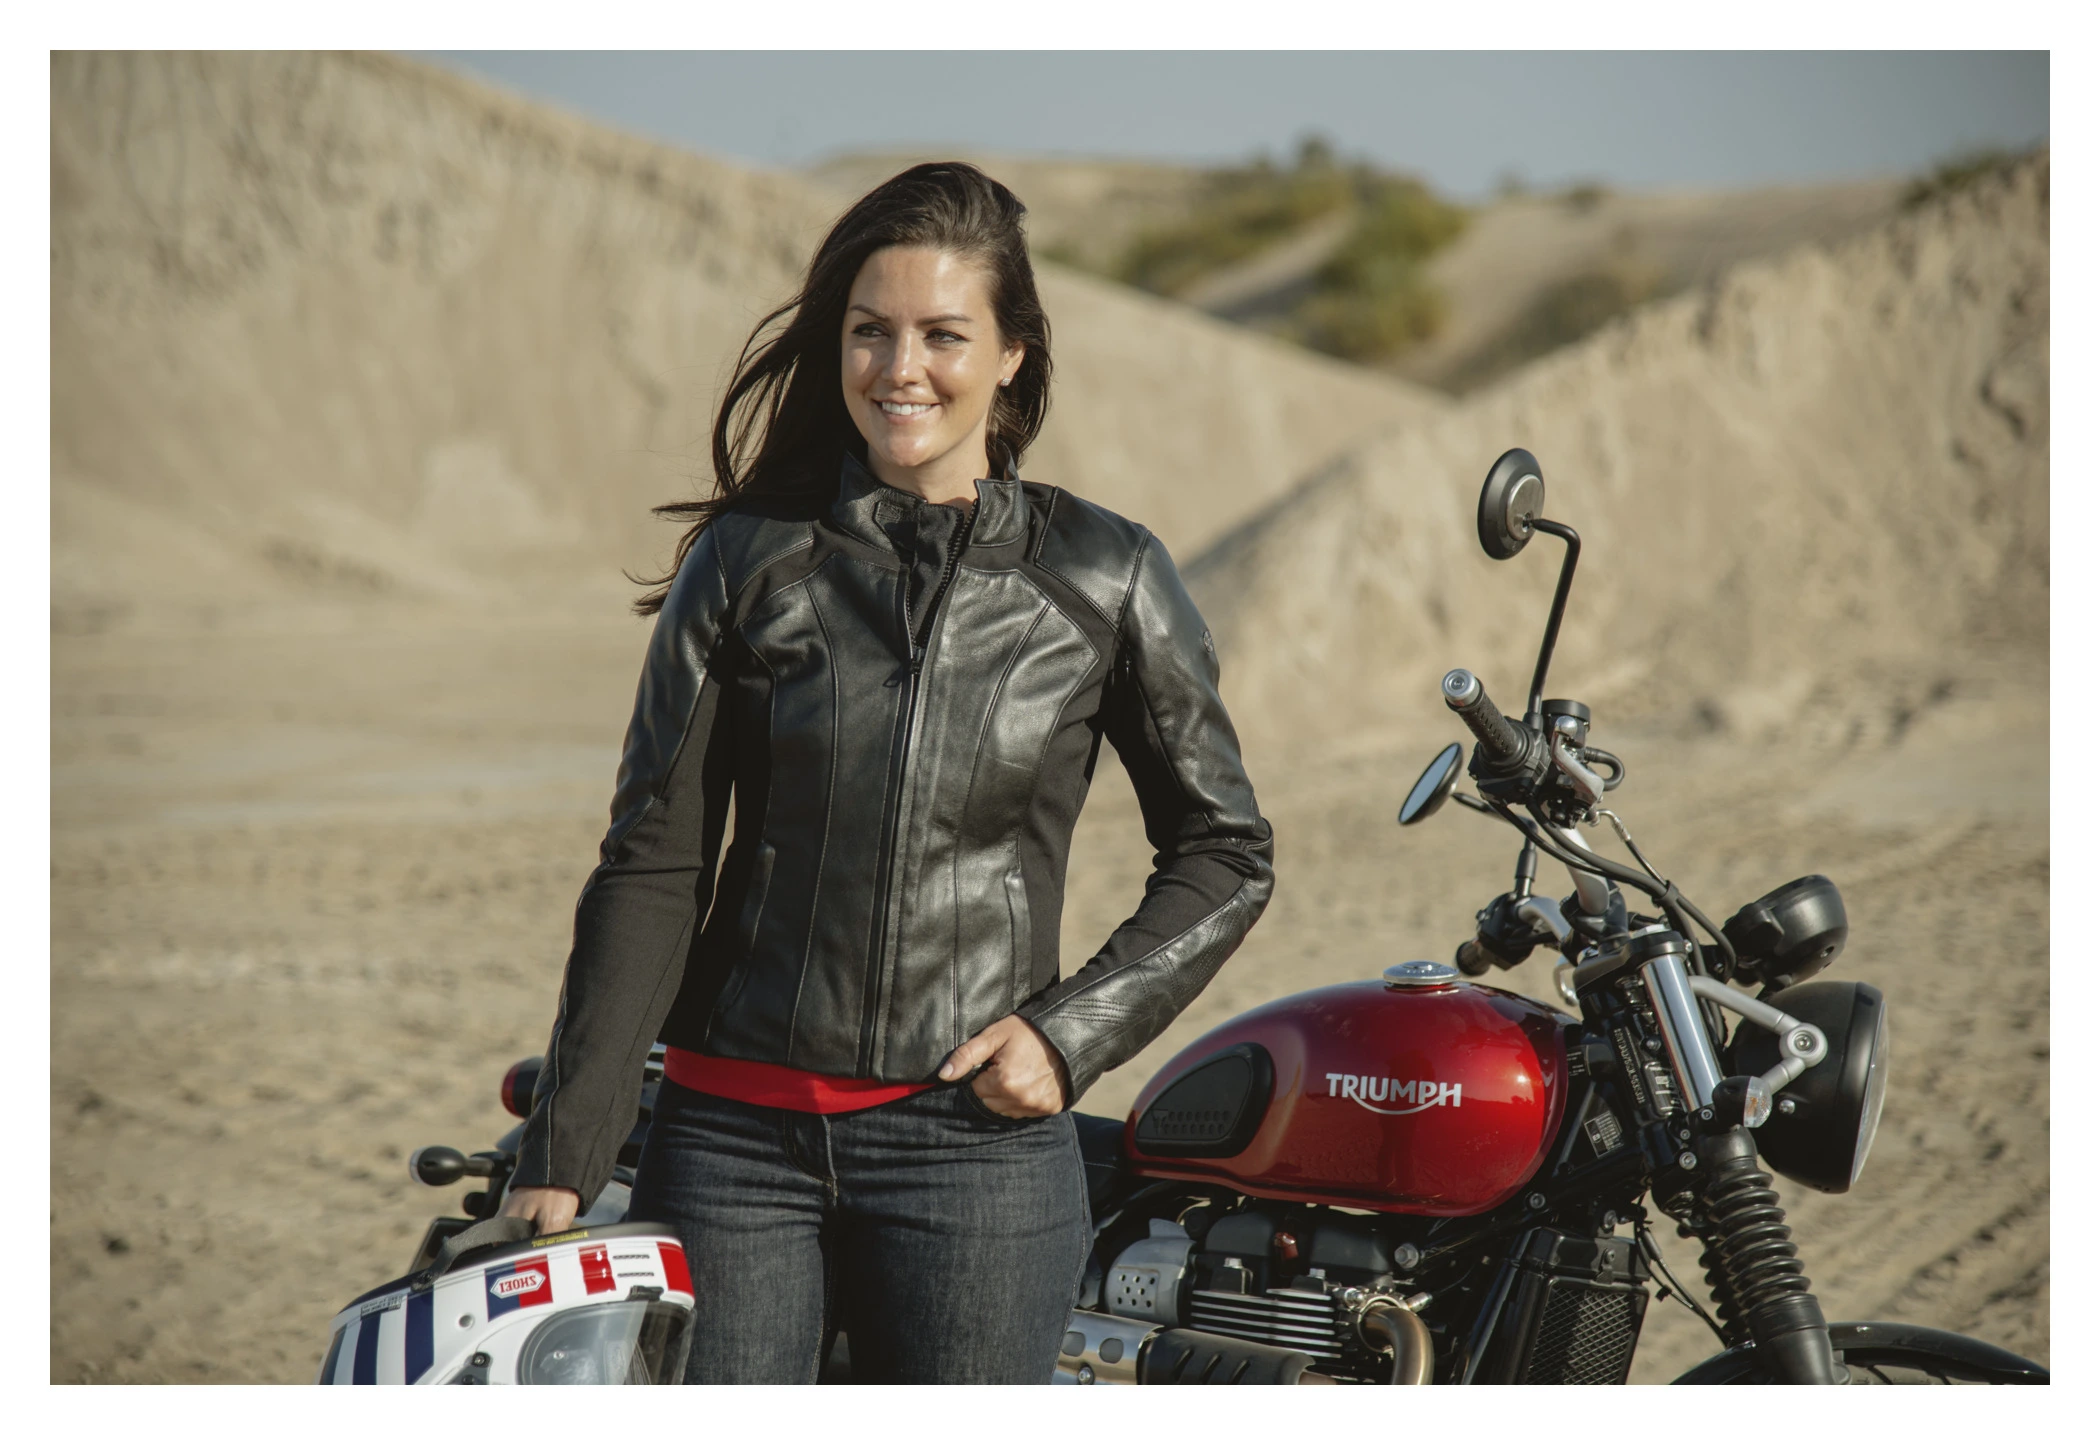 Women'S Faux Leather Motocross Racer Jacket Plus Size Motorcycle